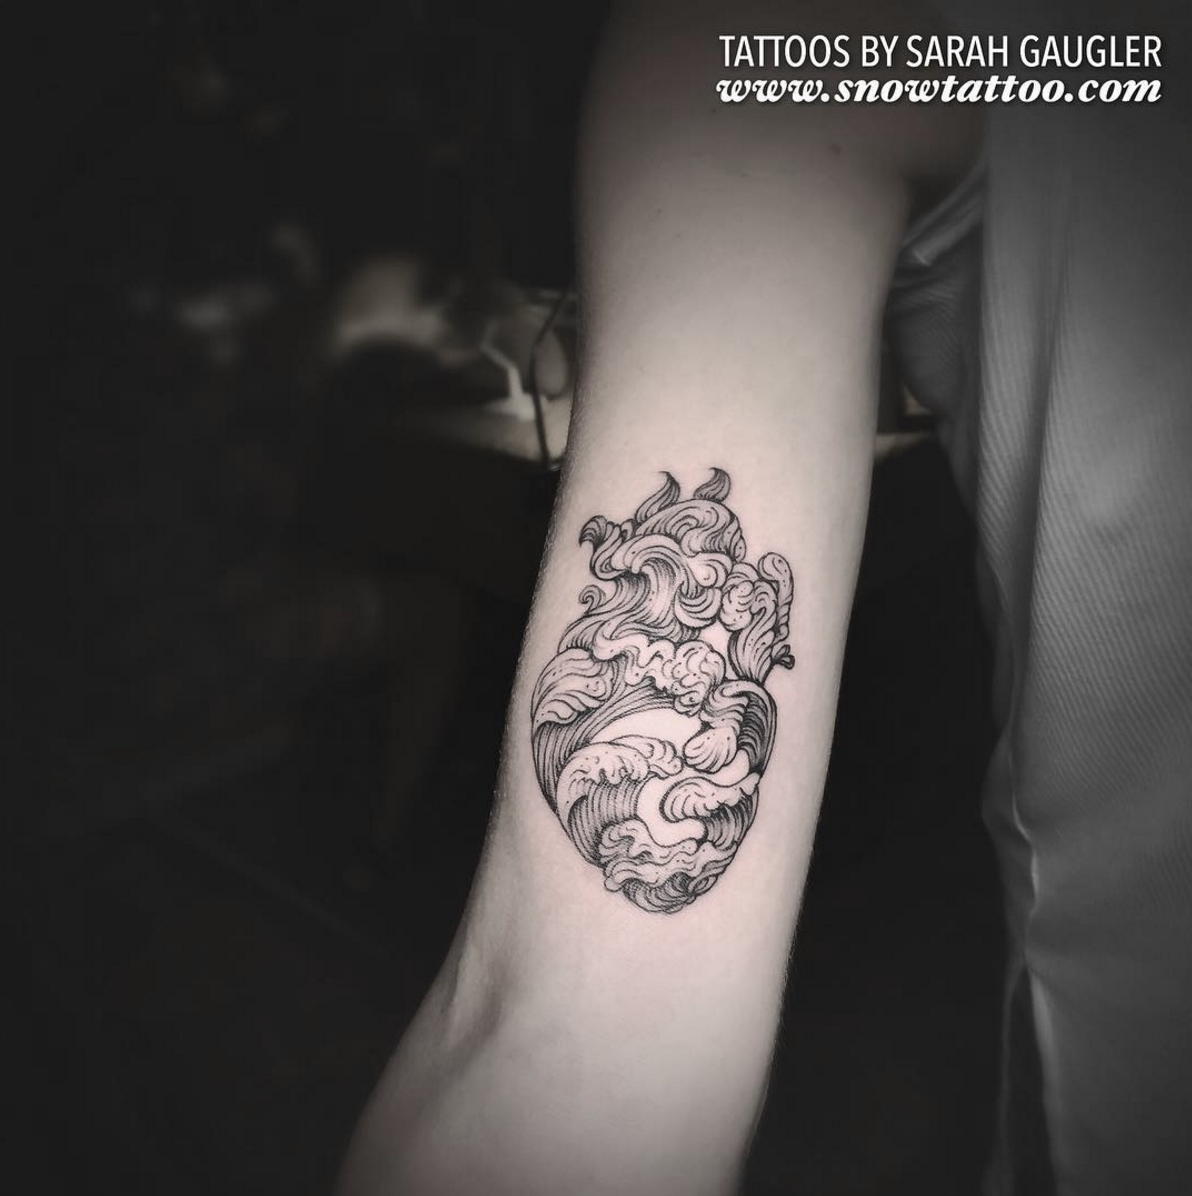 Sarah Gaugler Snow Tattoo Custom Heart Waves Intricate Detailed Original Linework Line Art Finelinetattoo Fine Line New York Best Tattoos Best Tattoo Artist NYC.png